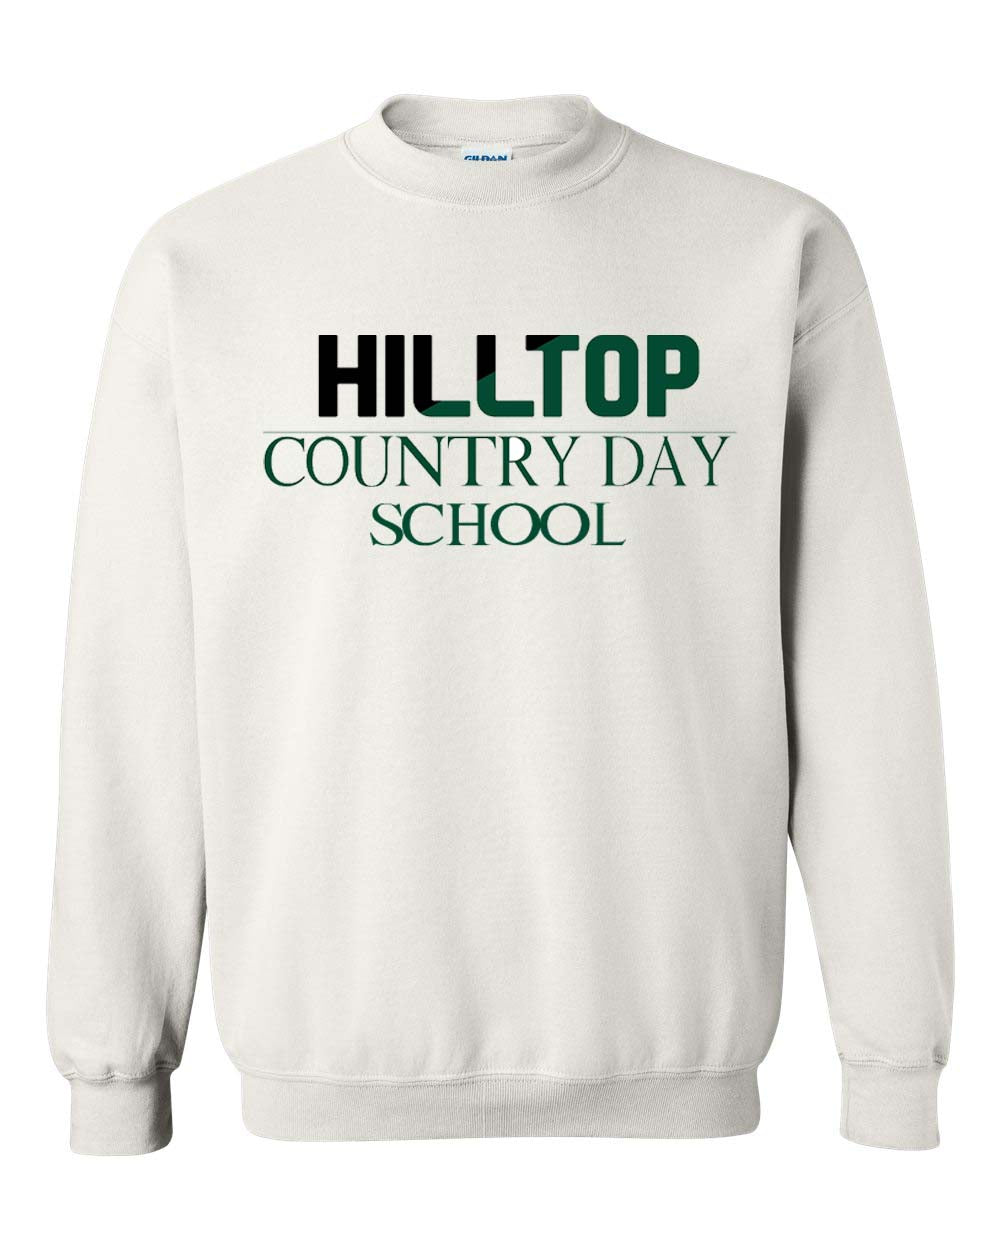 Hilltop Country Day School Design 4 non hooded sweatshirt